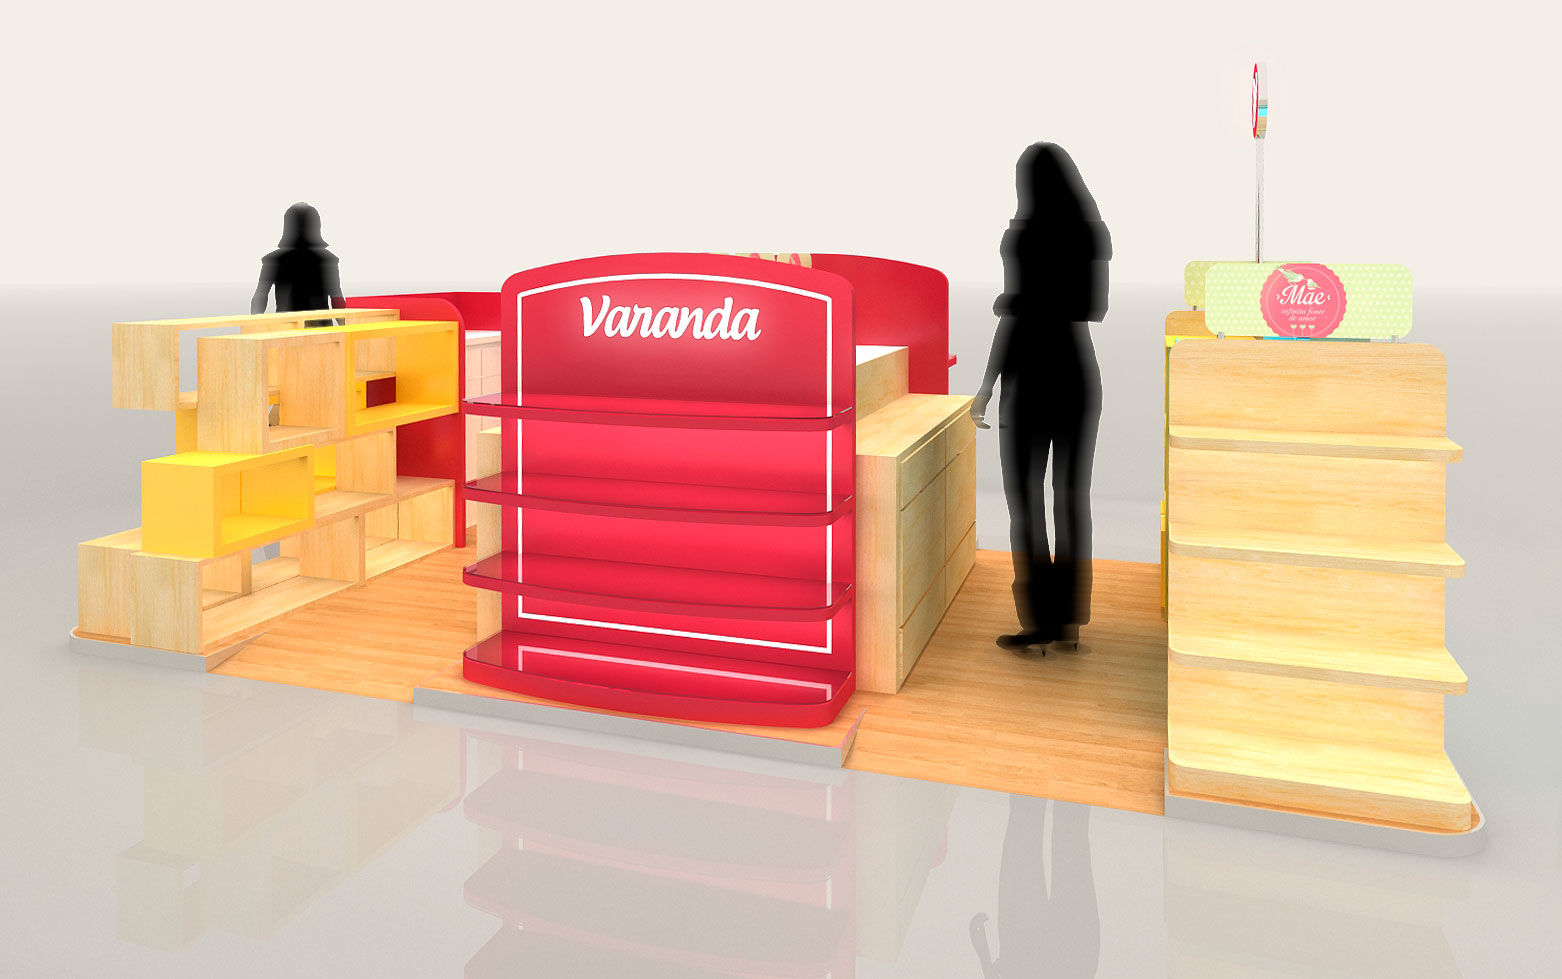 Projeto de quiosque de shopping para venda de presentes e produtos diversos, Varanda.